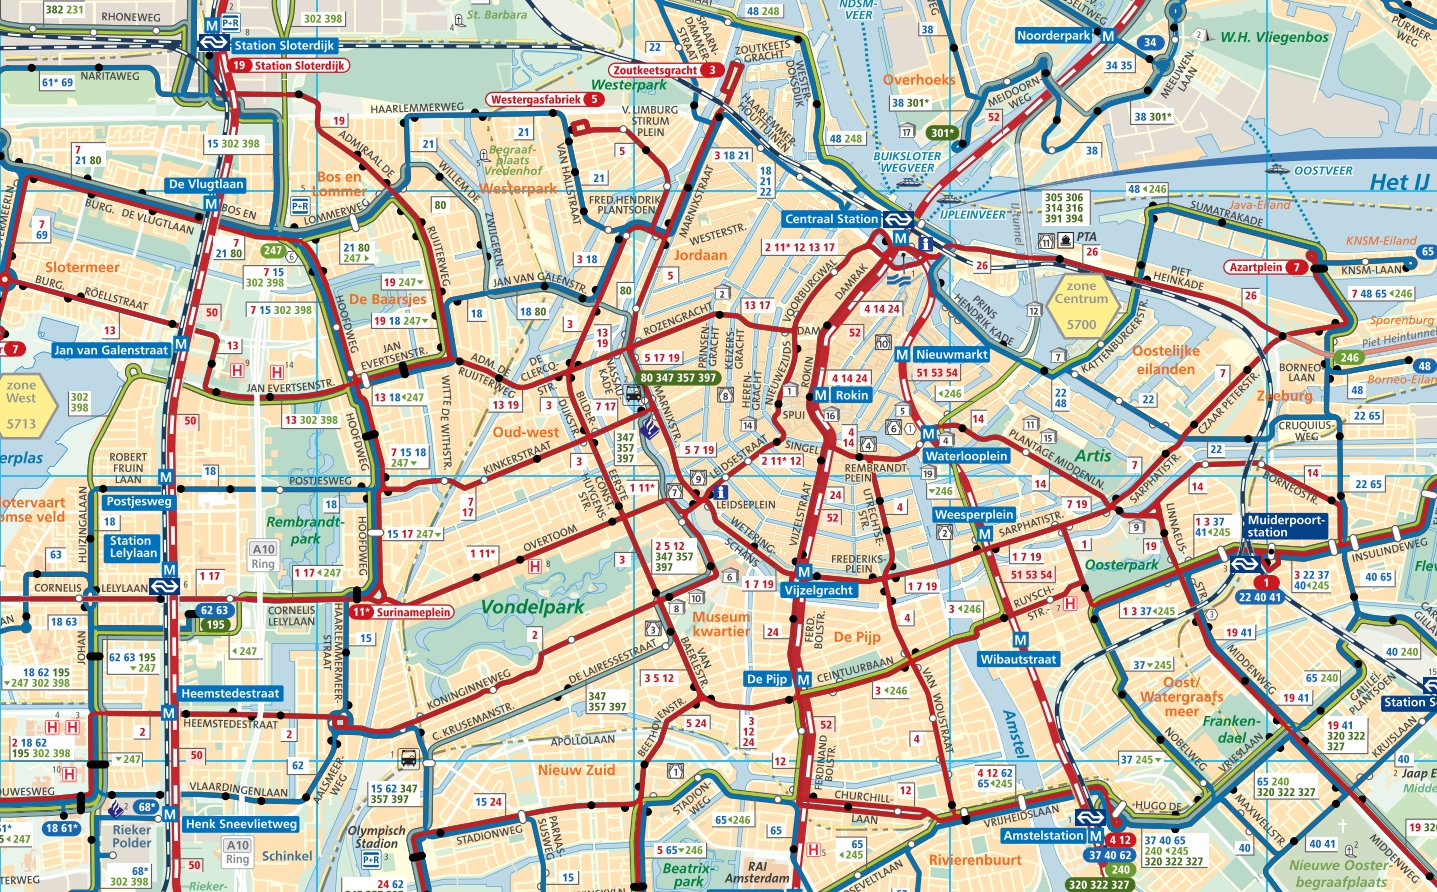 GVB Public Transportation Map 